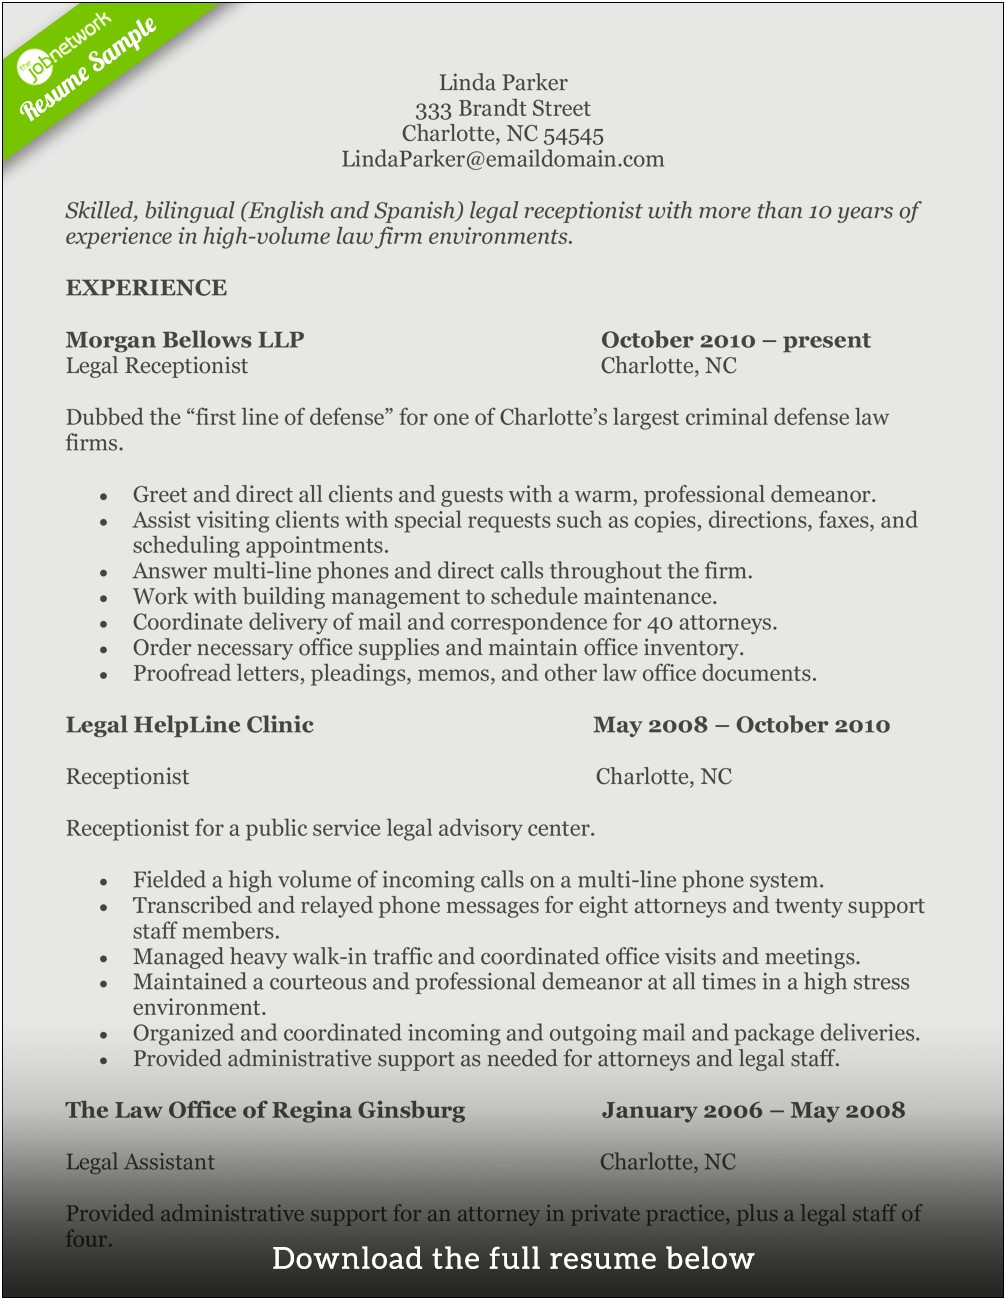 Receptionist Skills And Qualifications Resume